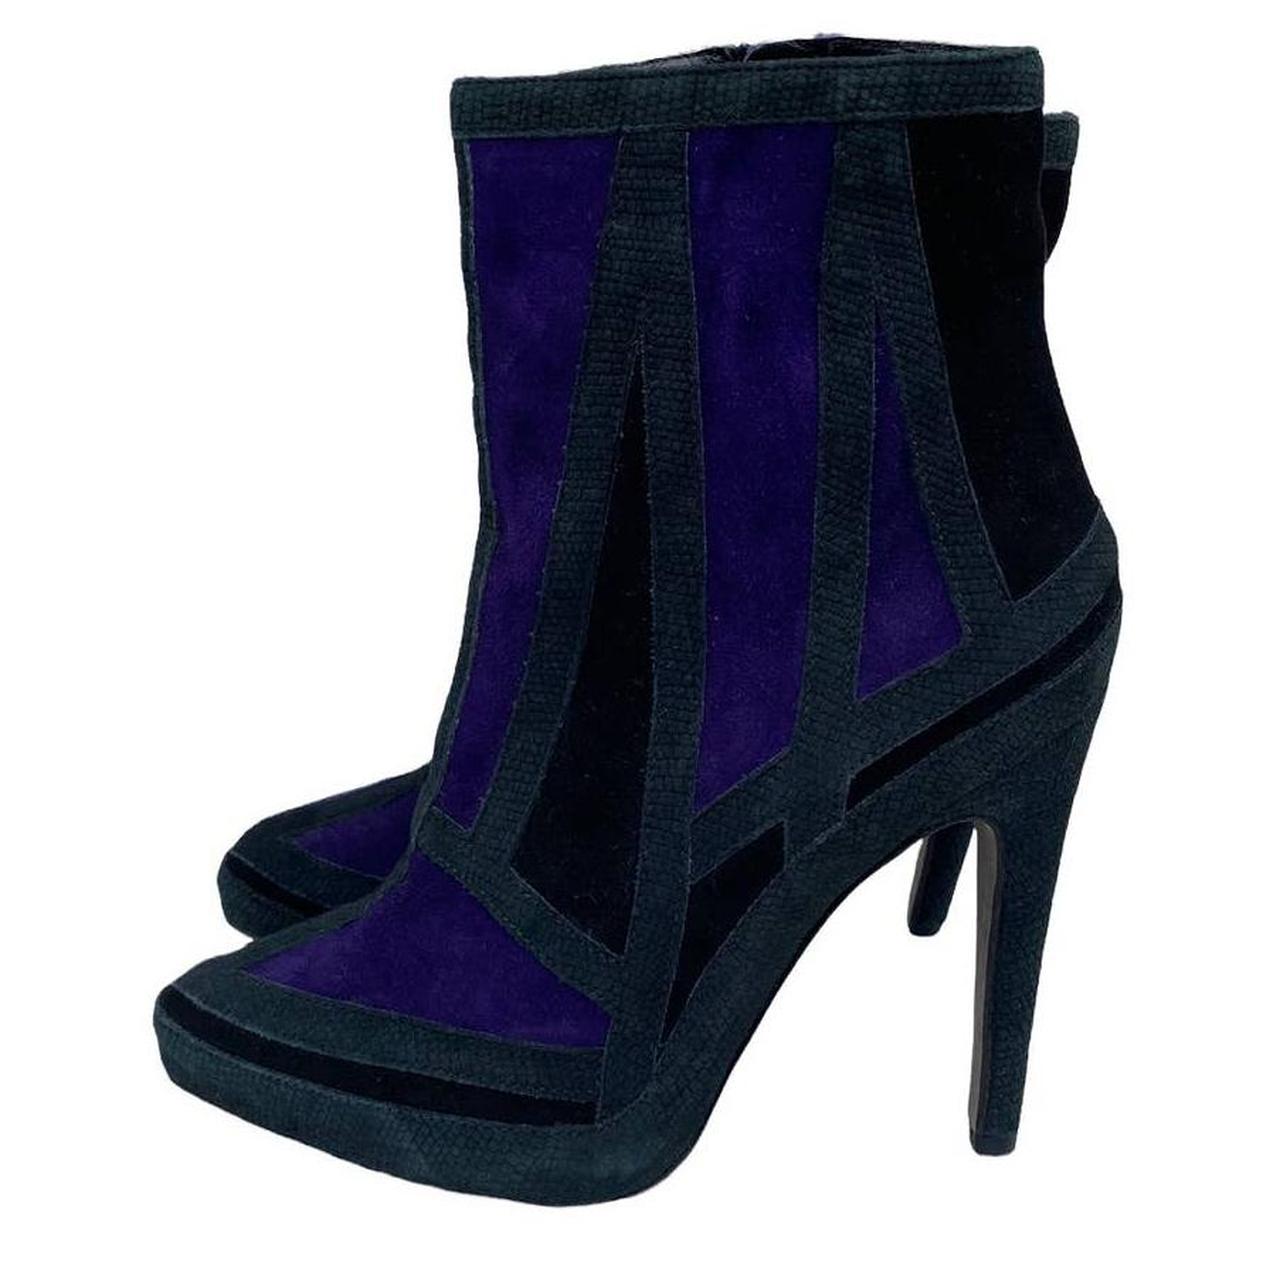 Aperlai Women's Black and Purple Boots (3)